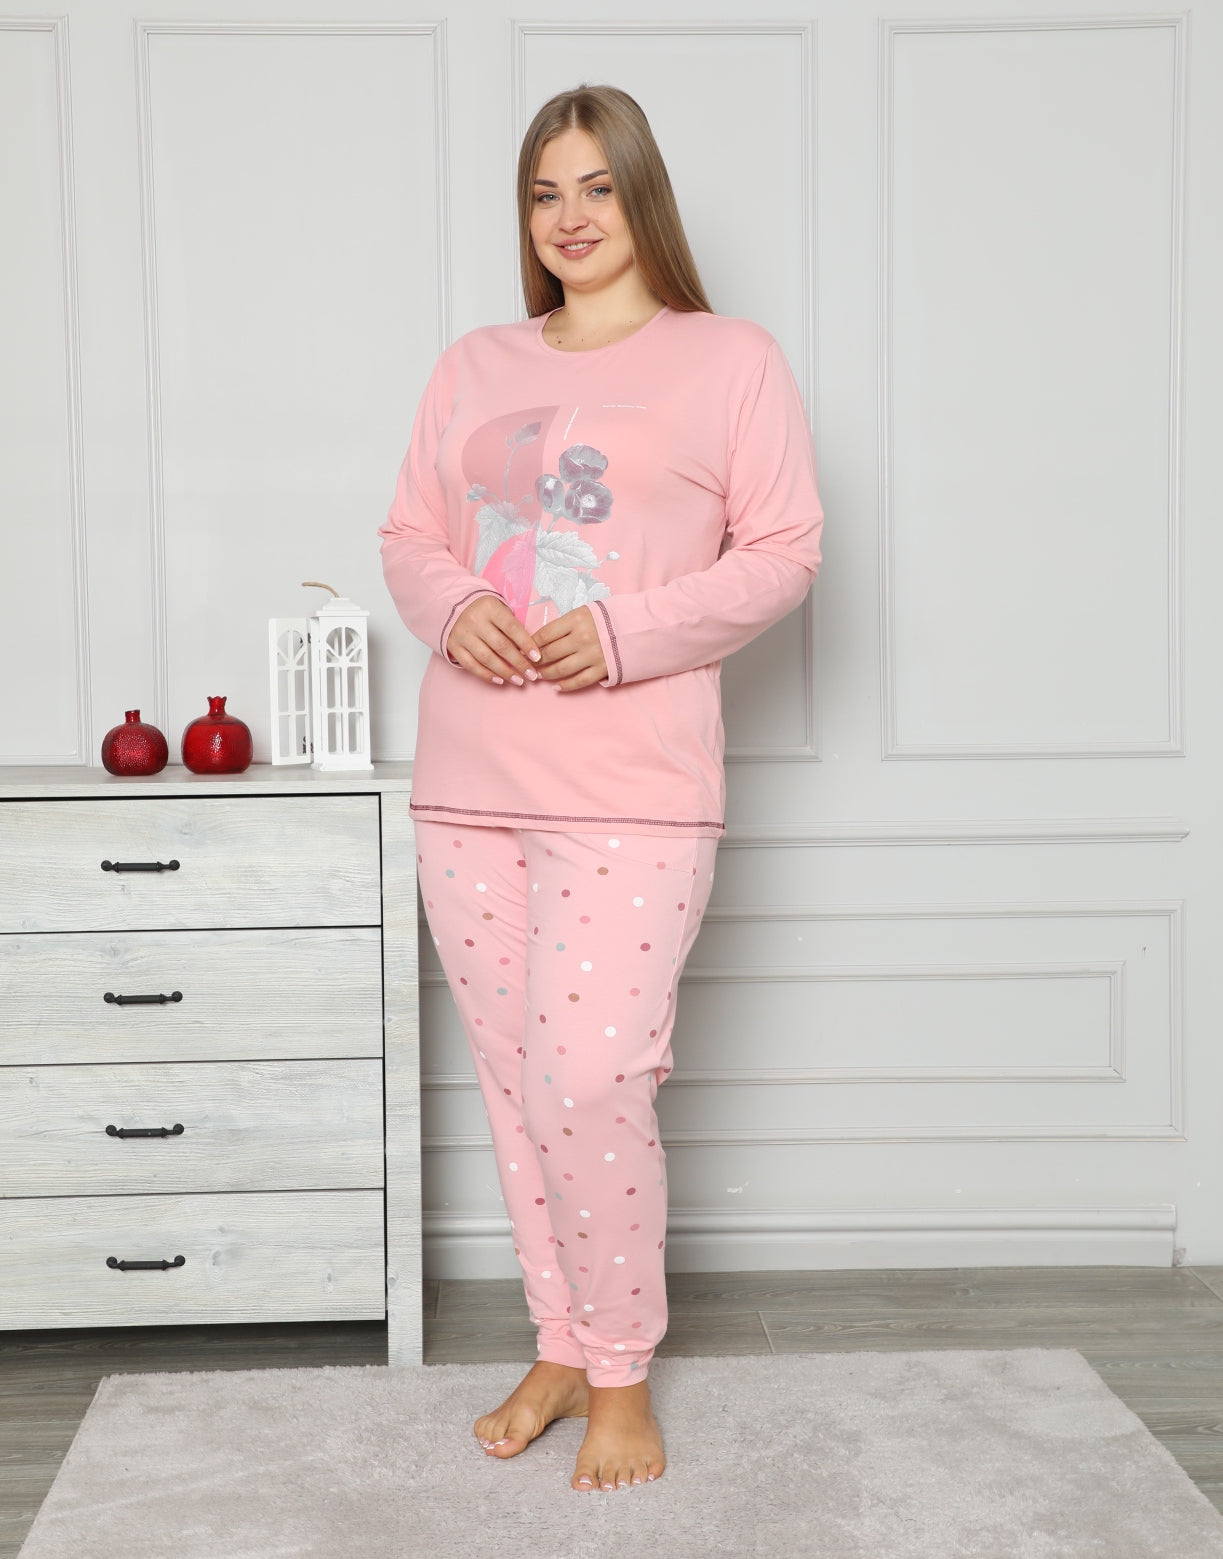 Damen Pyjama Übergröße Schlafanzug Hausanzug Nachtwäsche langarm 2XL-5XL